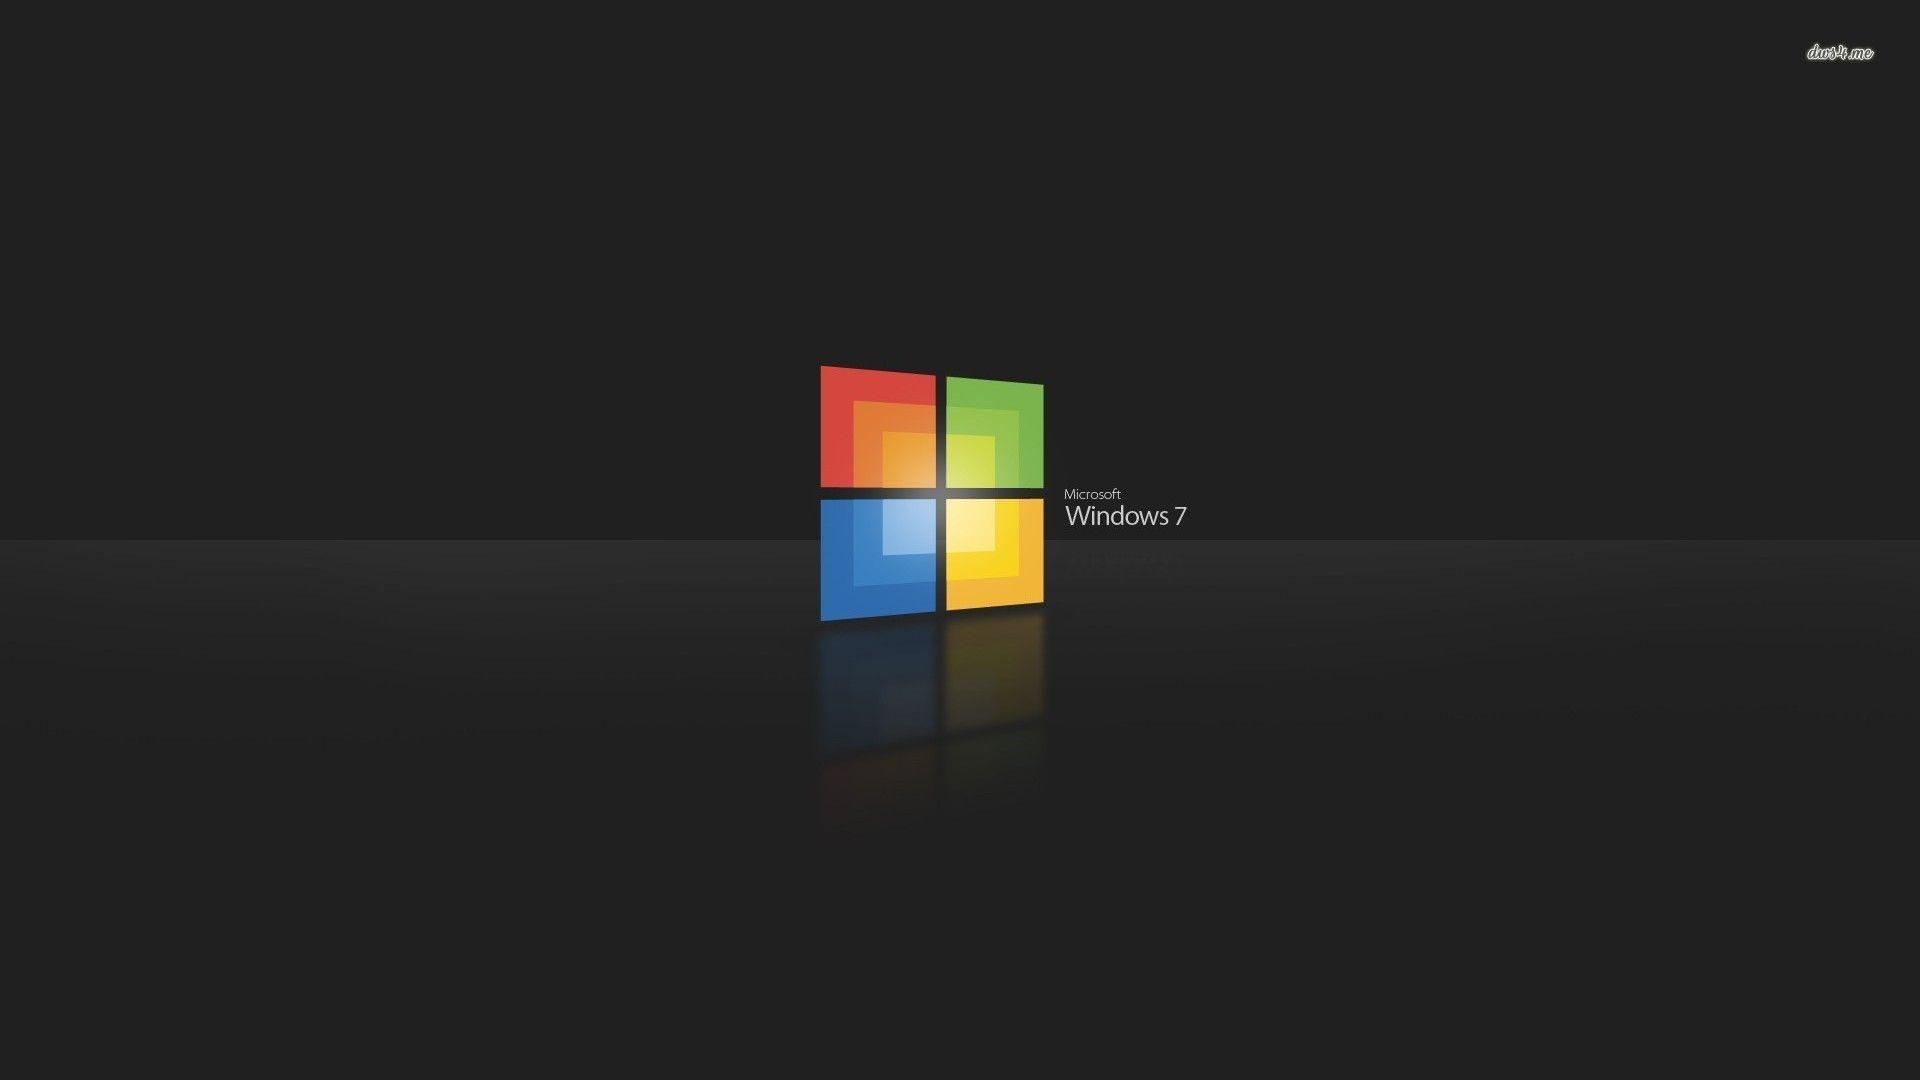 Microsoft Windows 7 wallpaper wallpaper - #